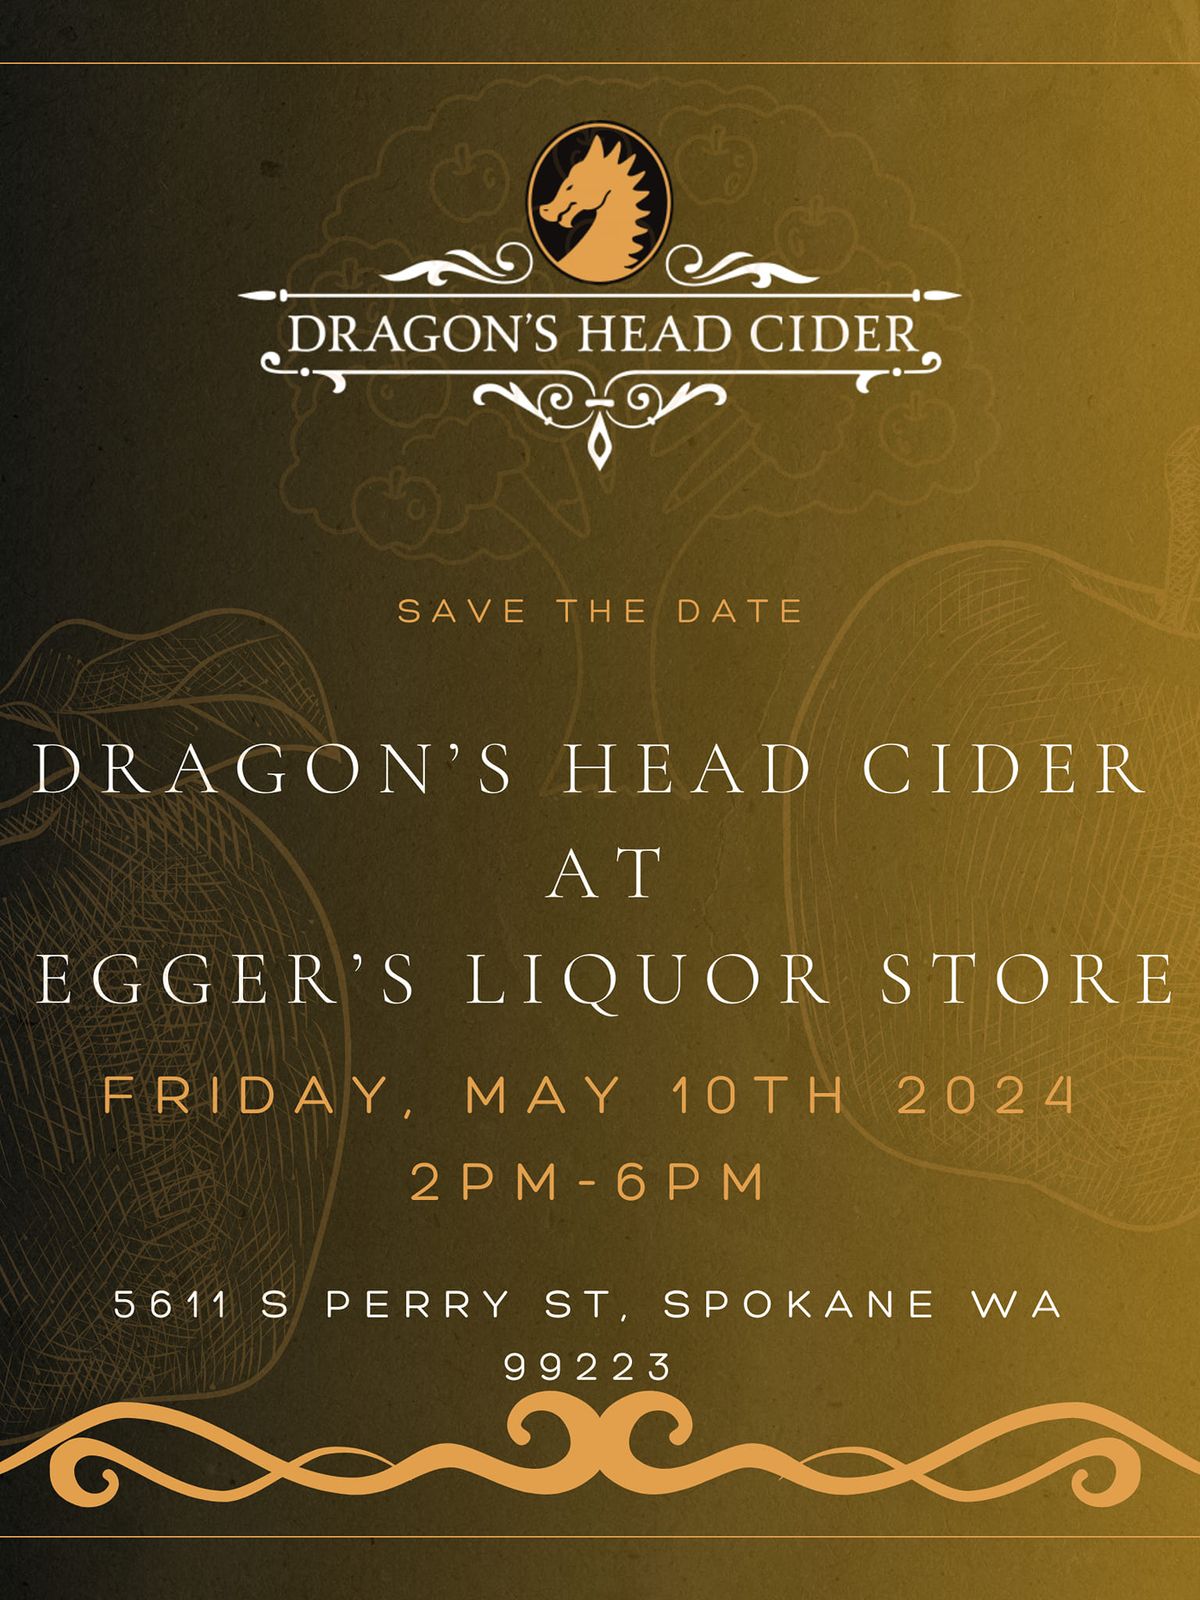 Cider Tasting Event with Dragon Head Cider!